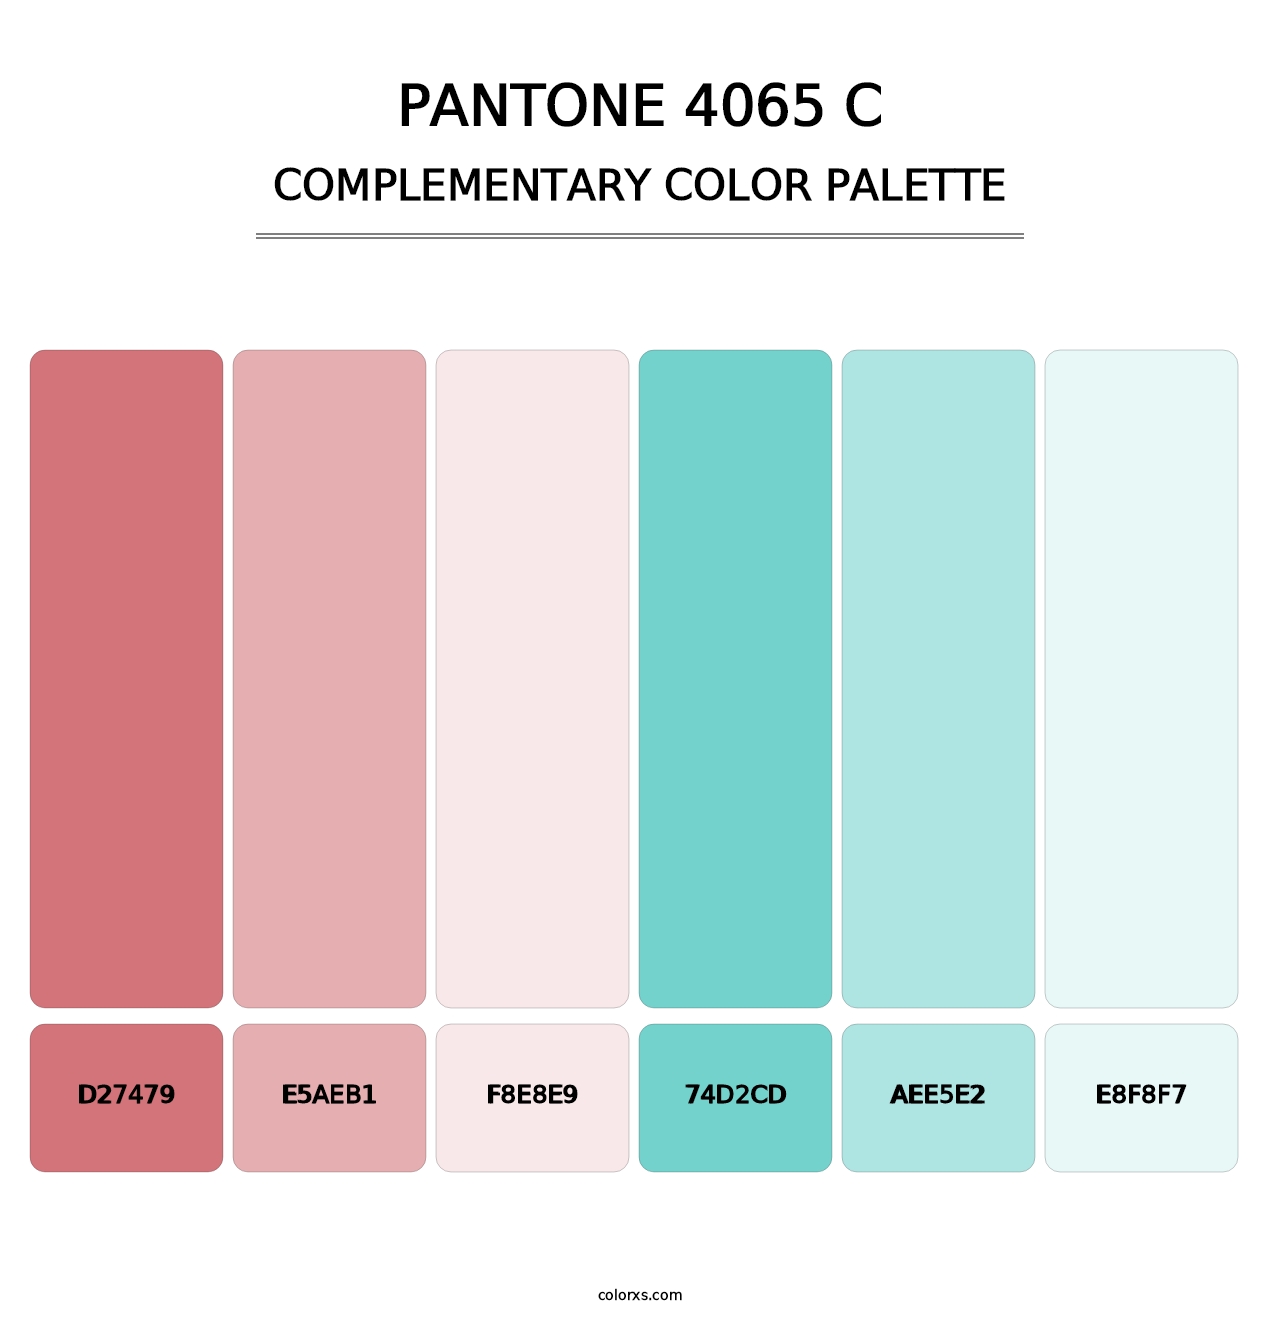 PANTONE 4065 C - Complementary Color Palette